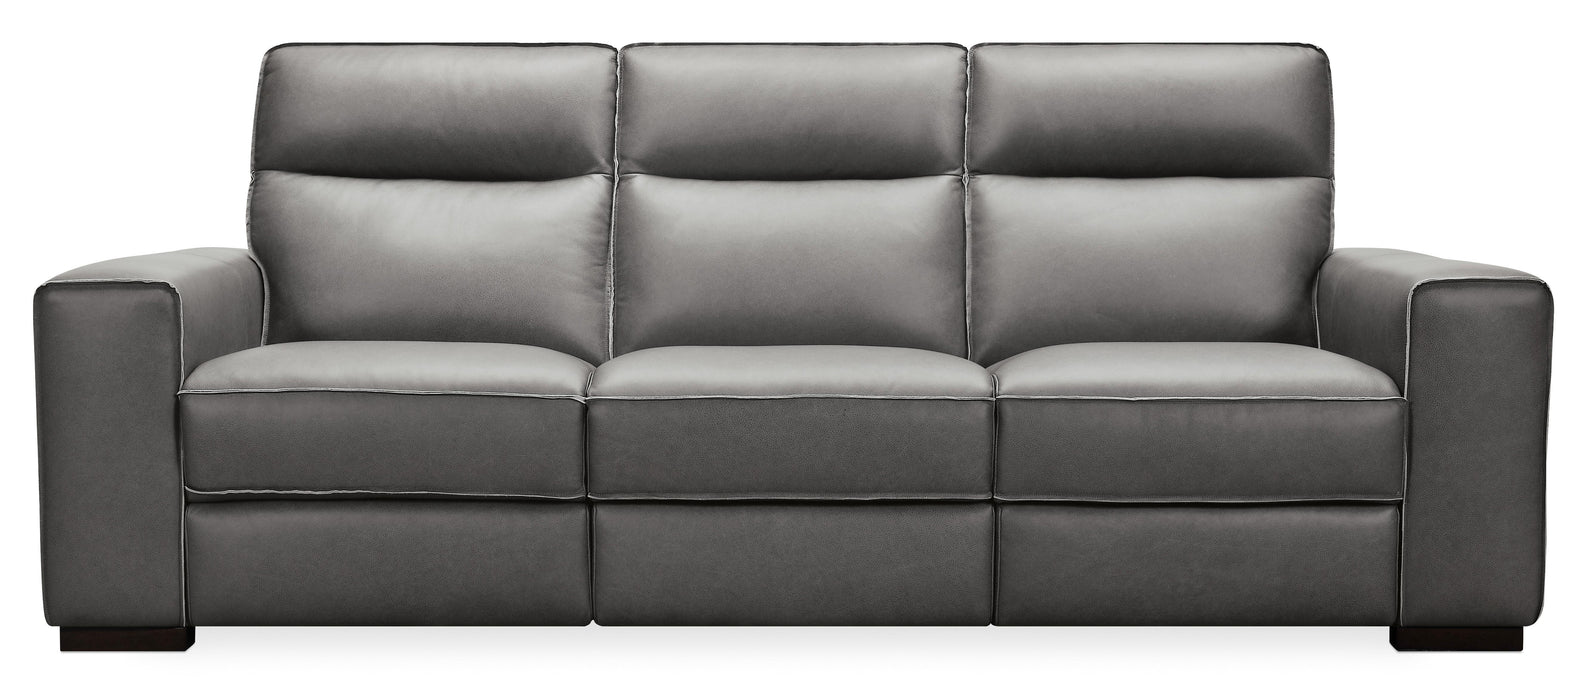 Braeburn Leather Sofa w/PWR Recline PWR Headrest